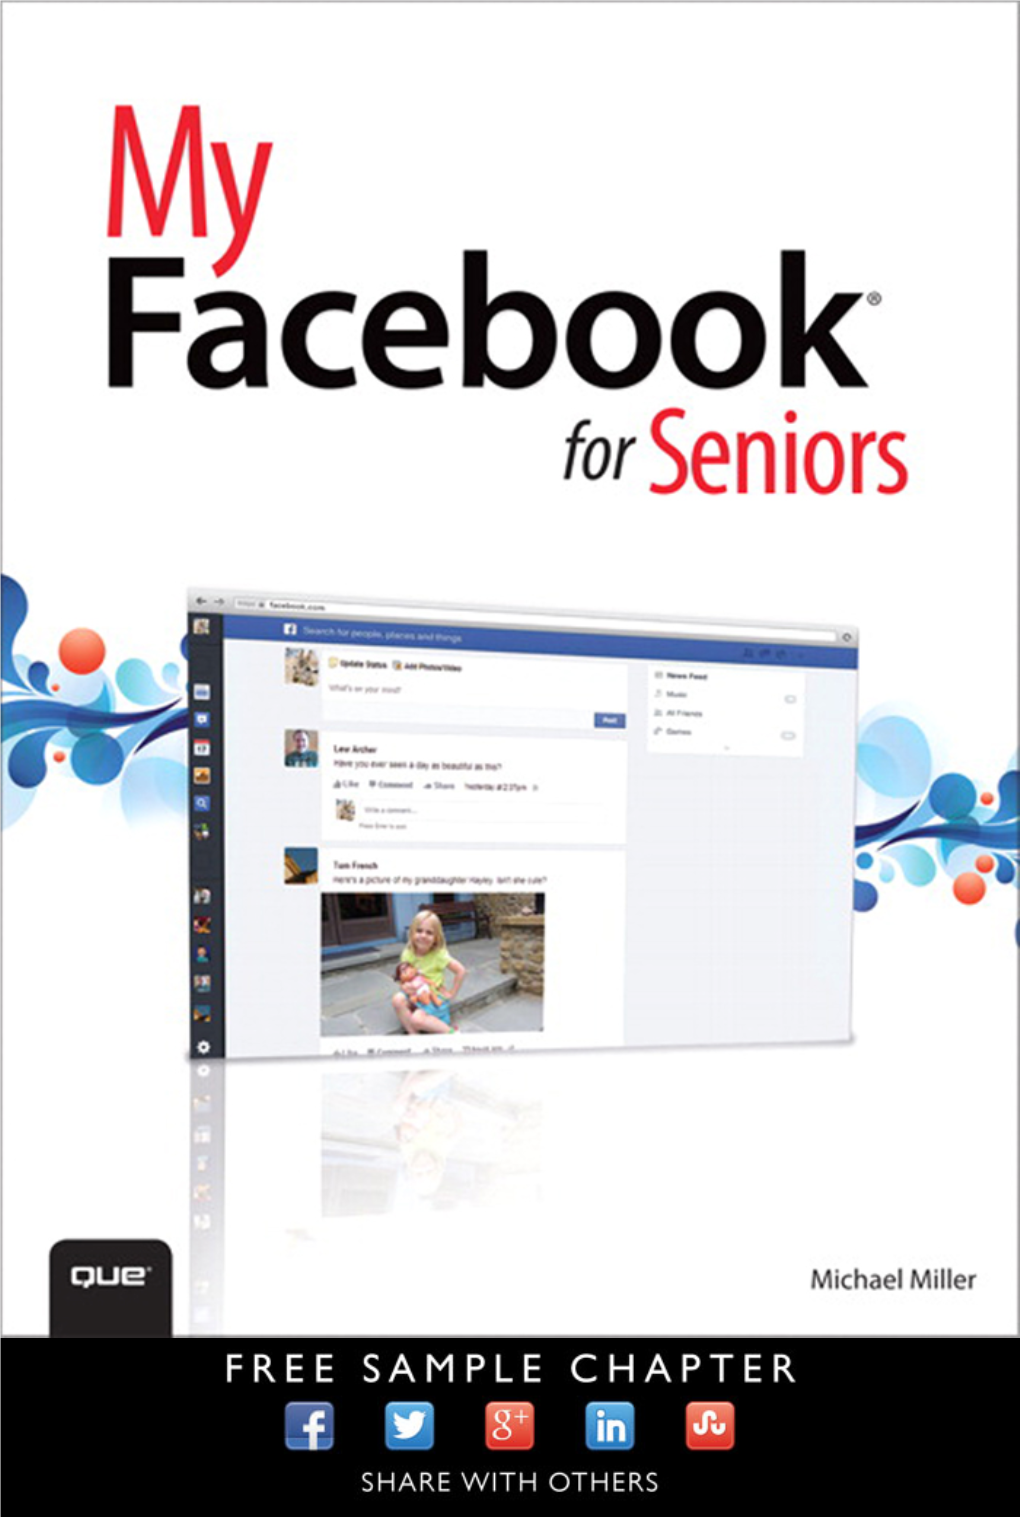 My Facebook® for Seniors